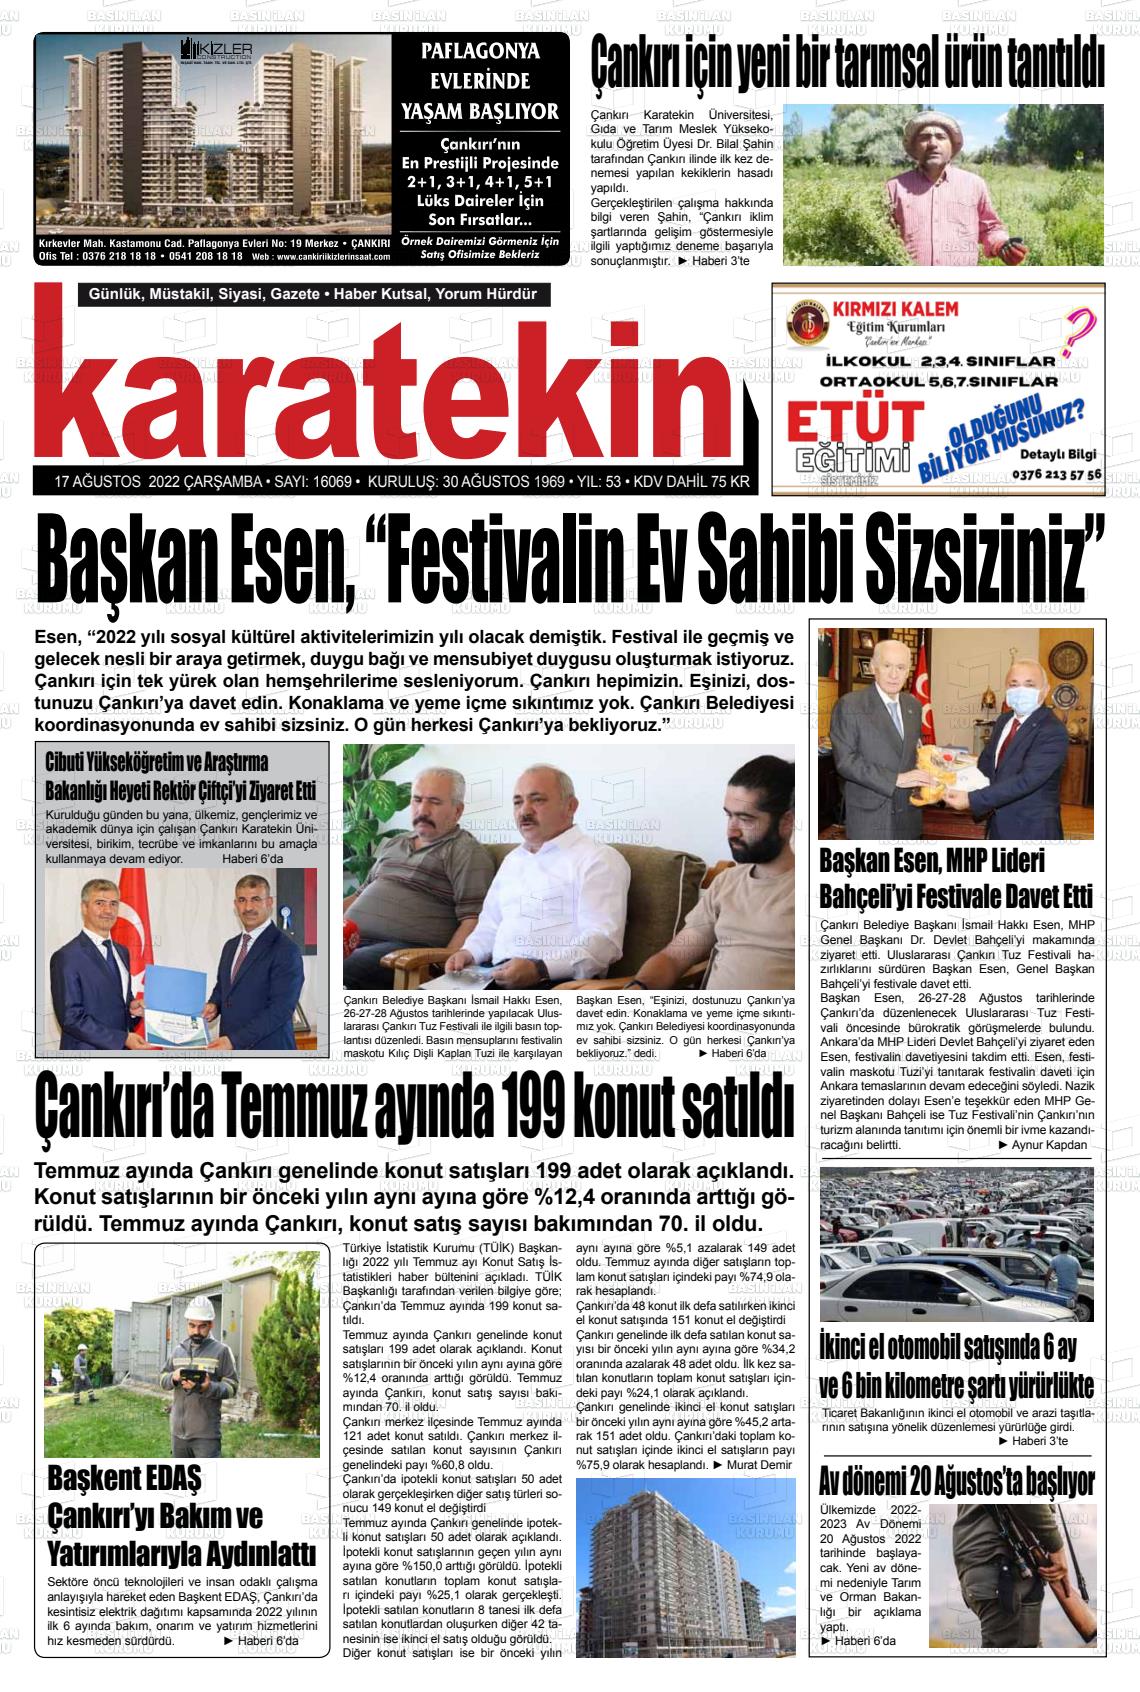 17 Ağustos 2022 Karatekin Gazete Manşeti